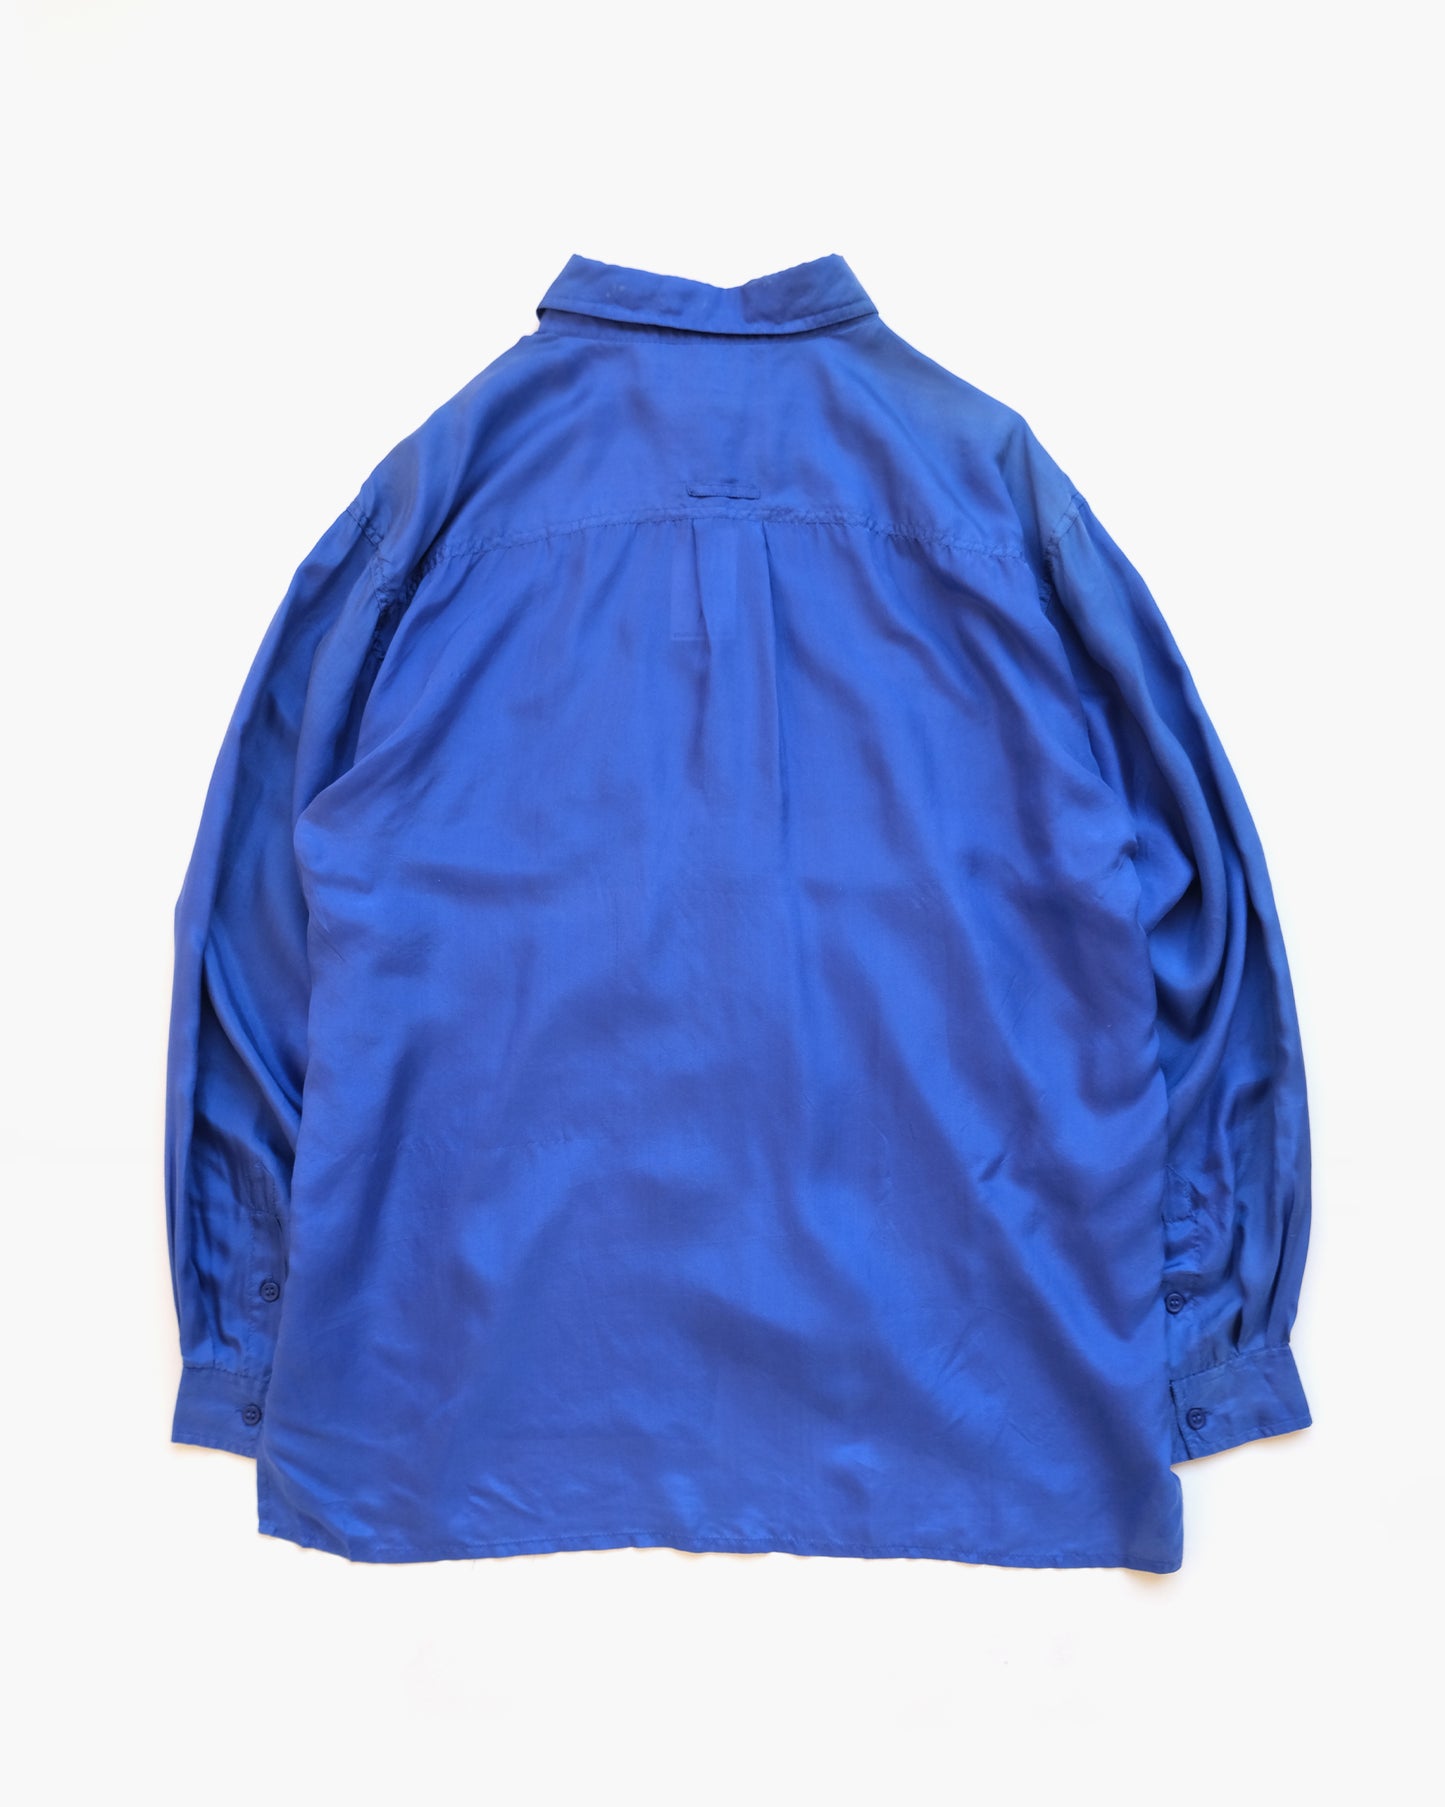 N.O.S  100% Silk Shirts - Blue